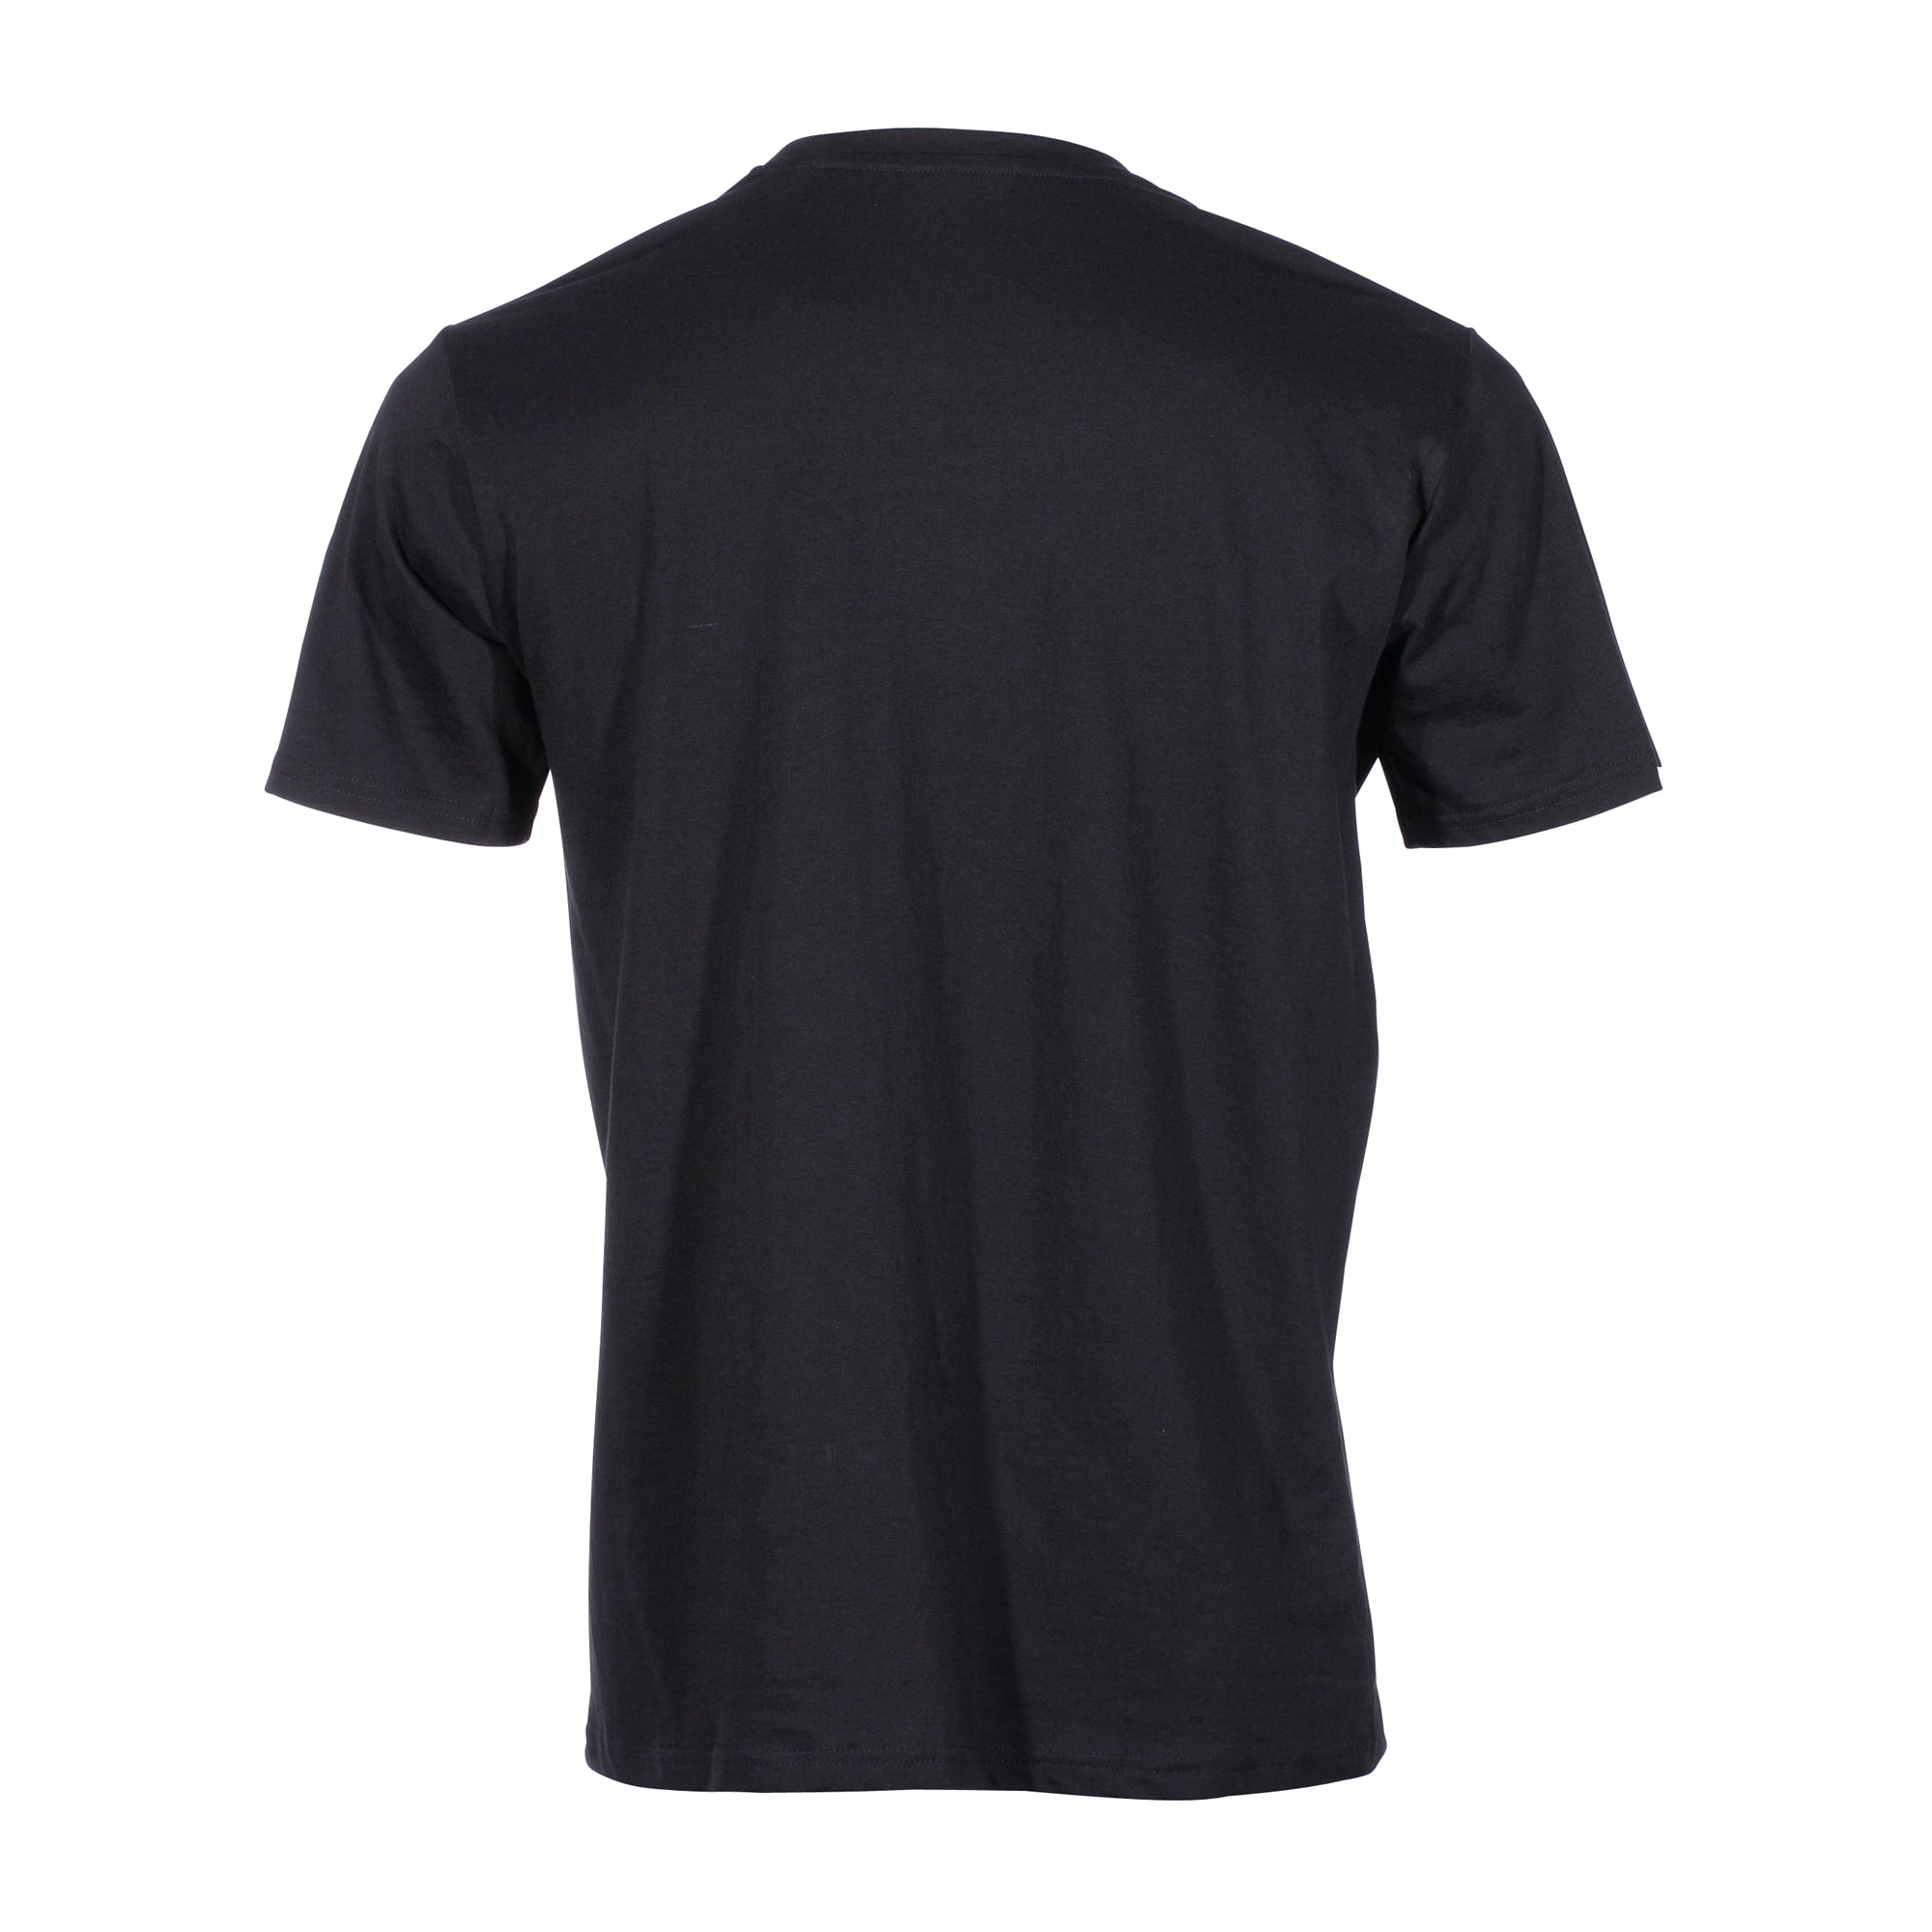 Purchase the Top Gun T-Shirt black by ASMC